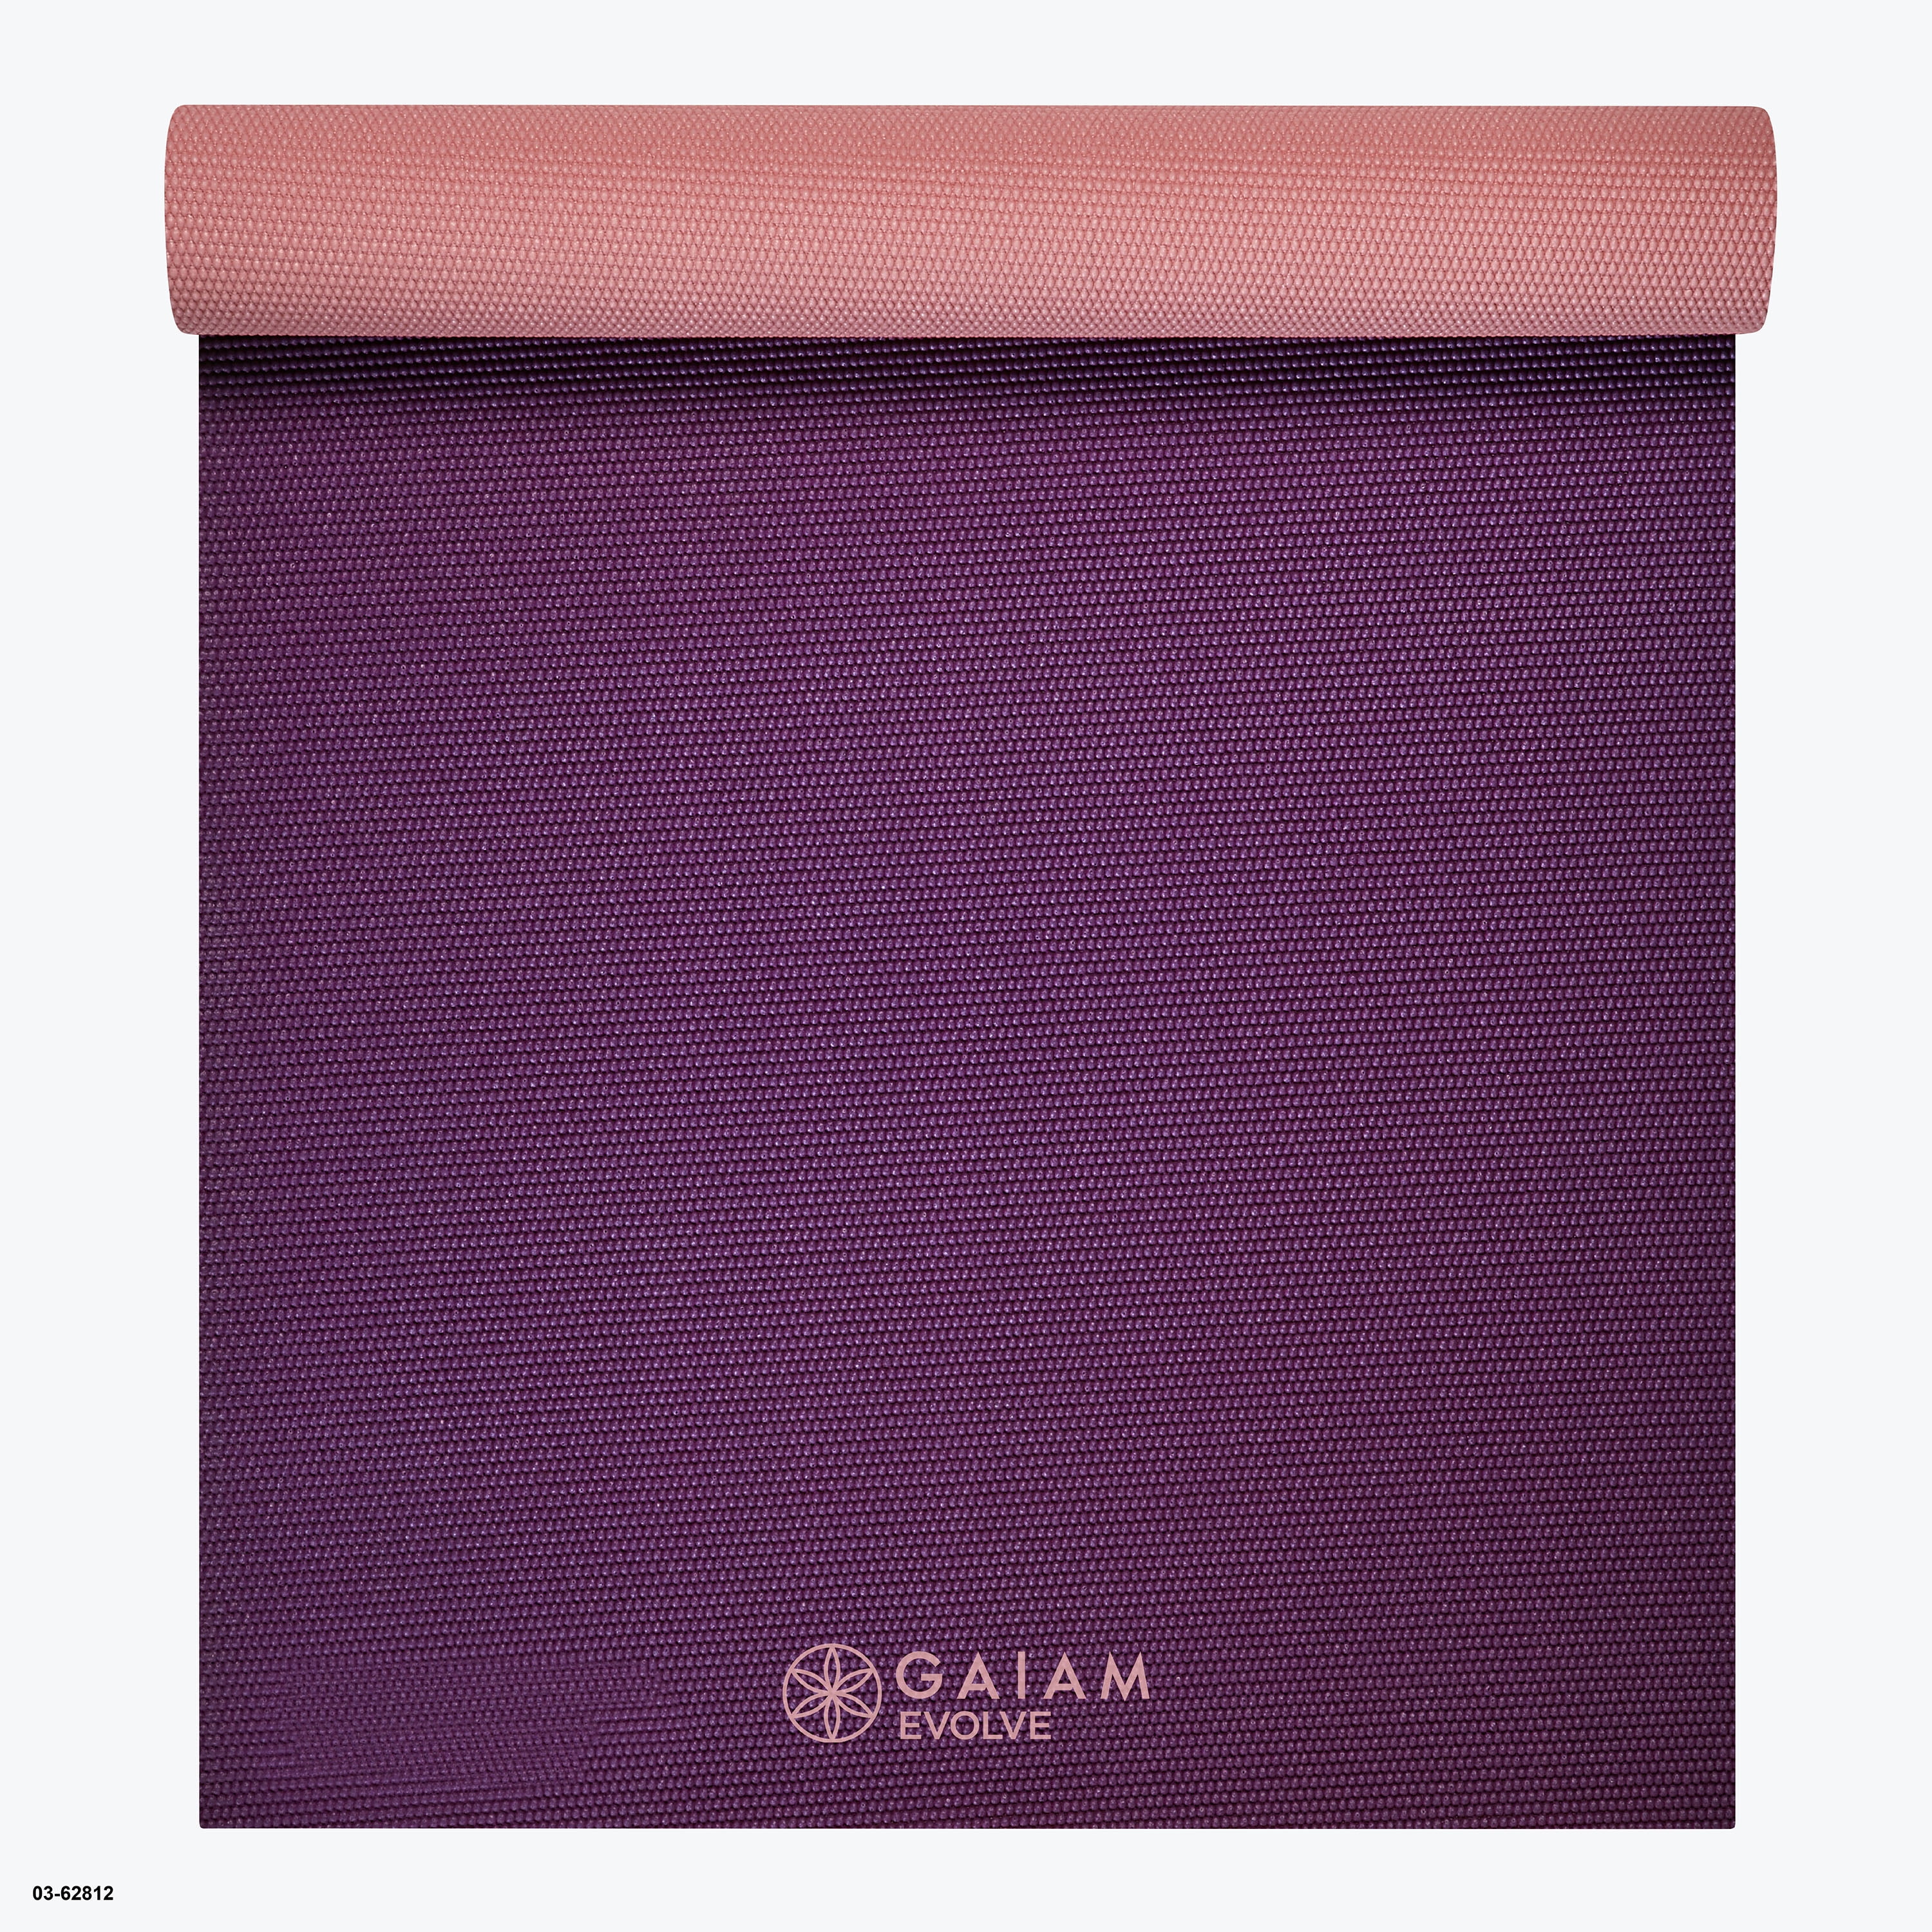 Gaiam Evolve Yoga Fitness Mat 6mm Eco Reversible 